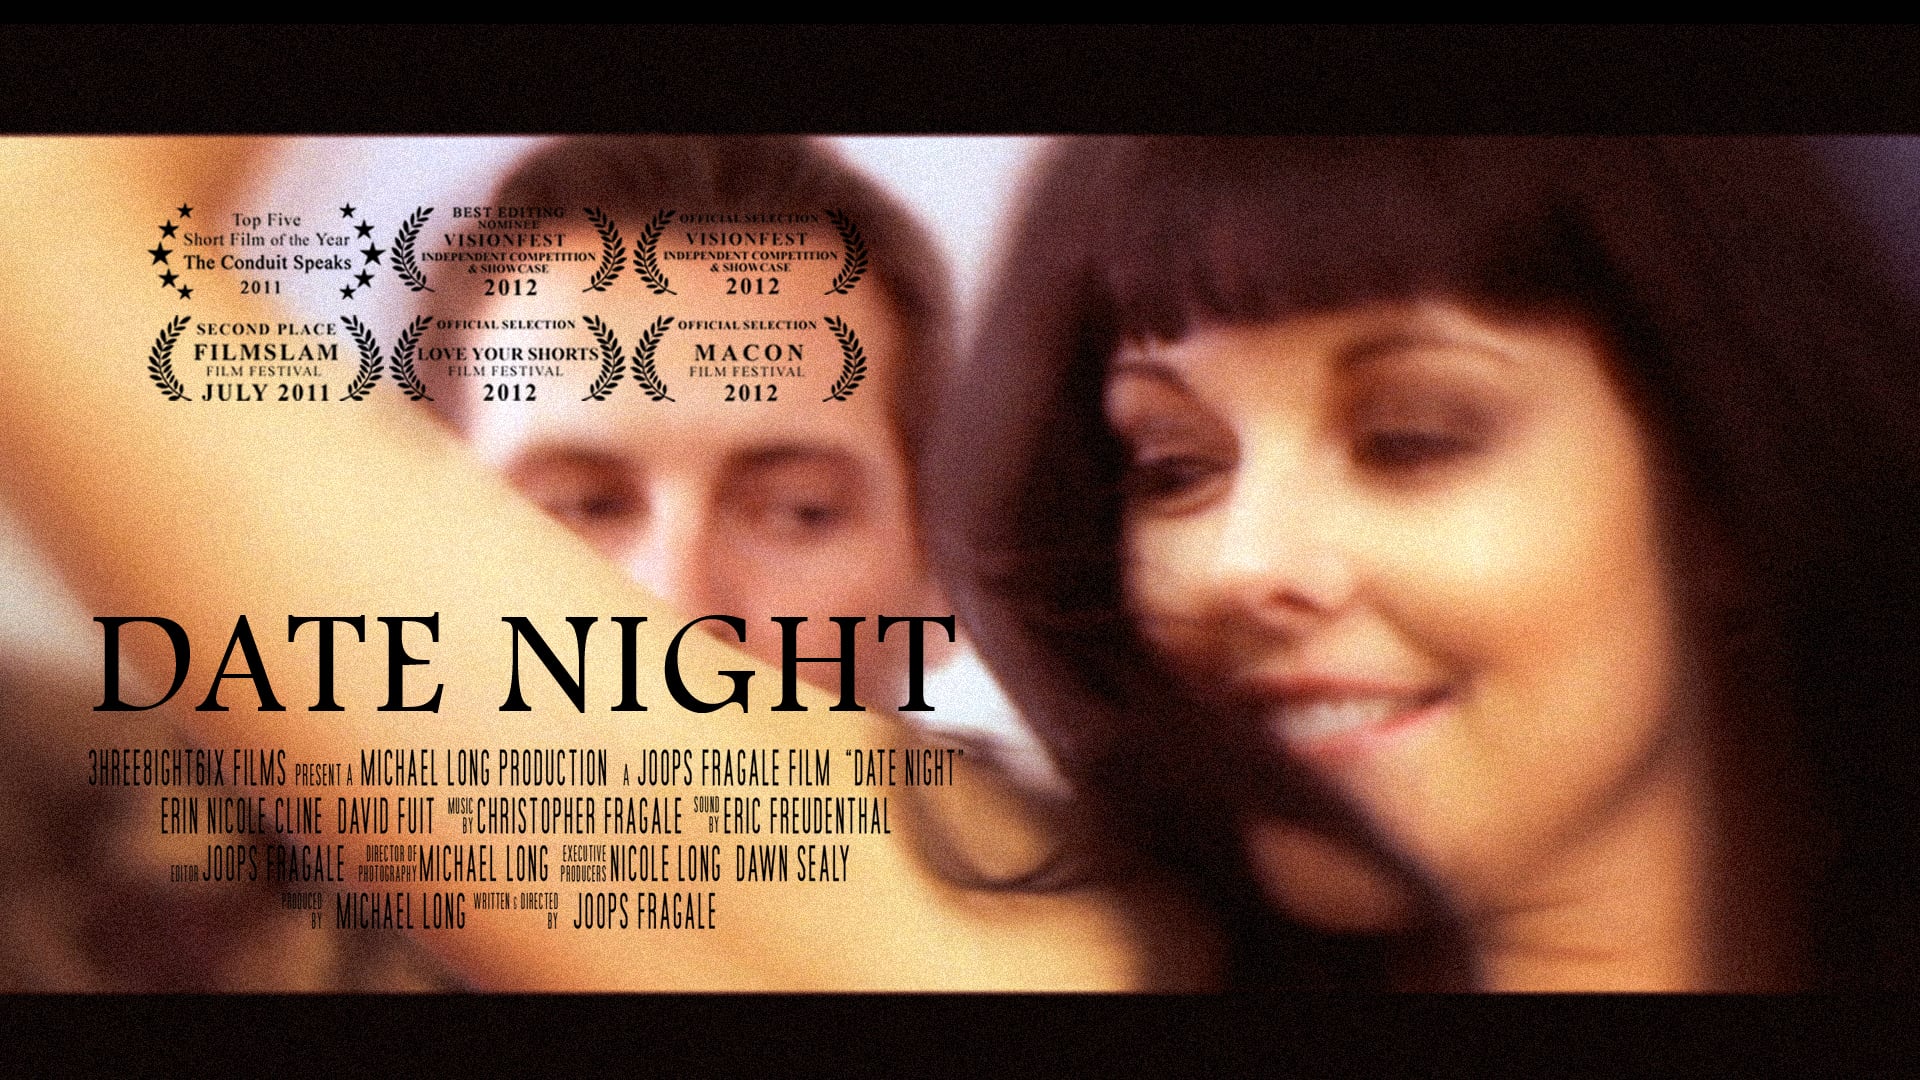 Date Night (trailer)